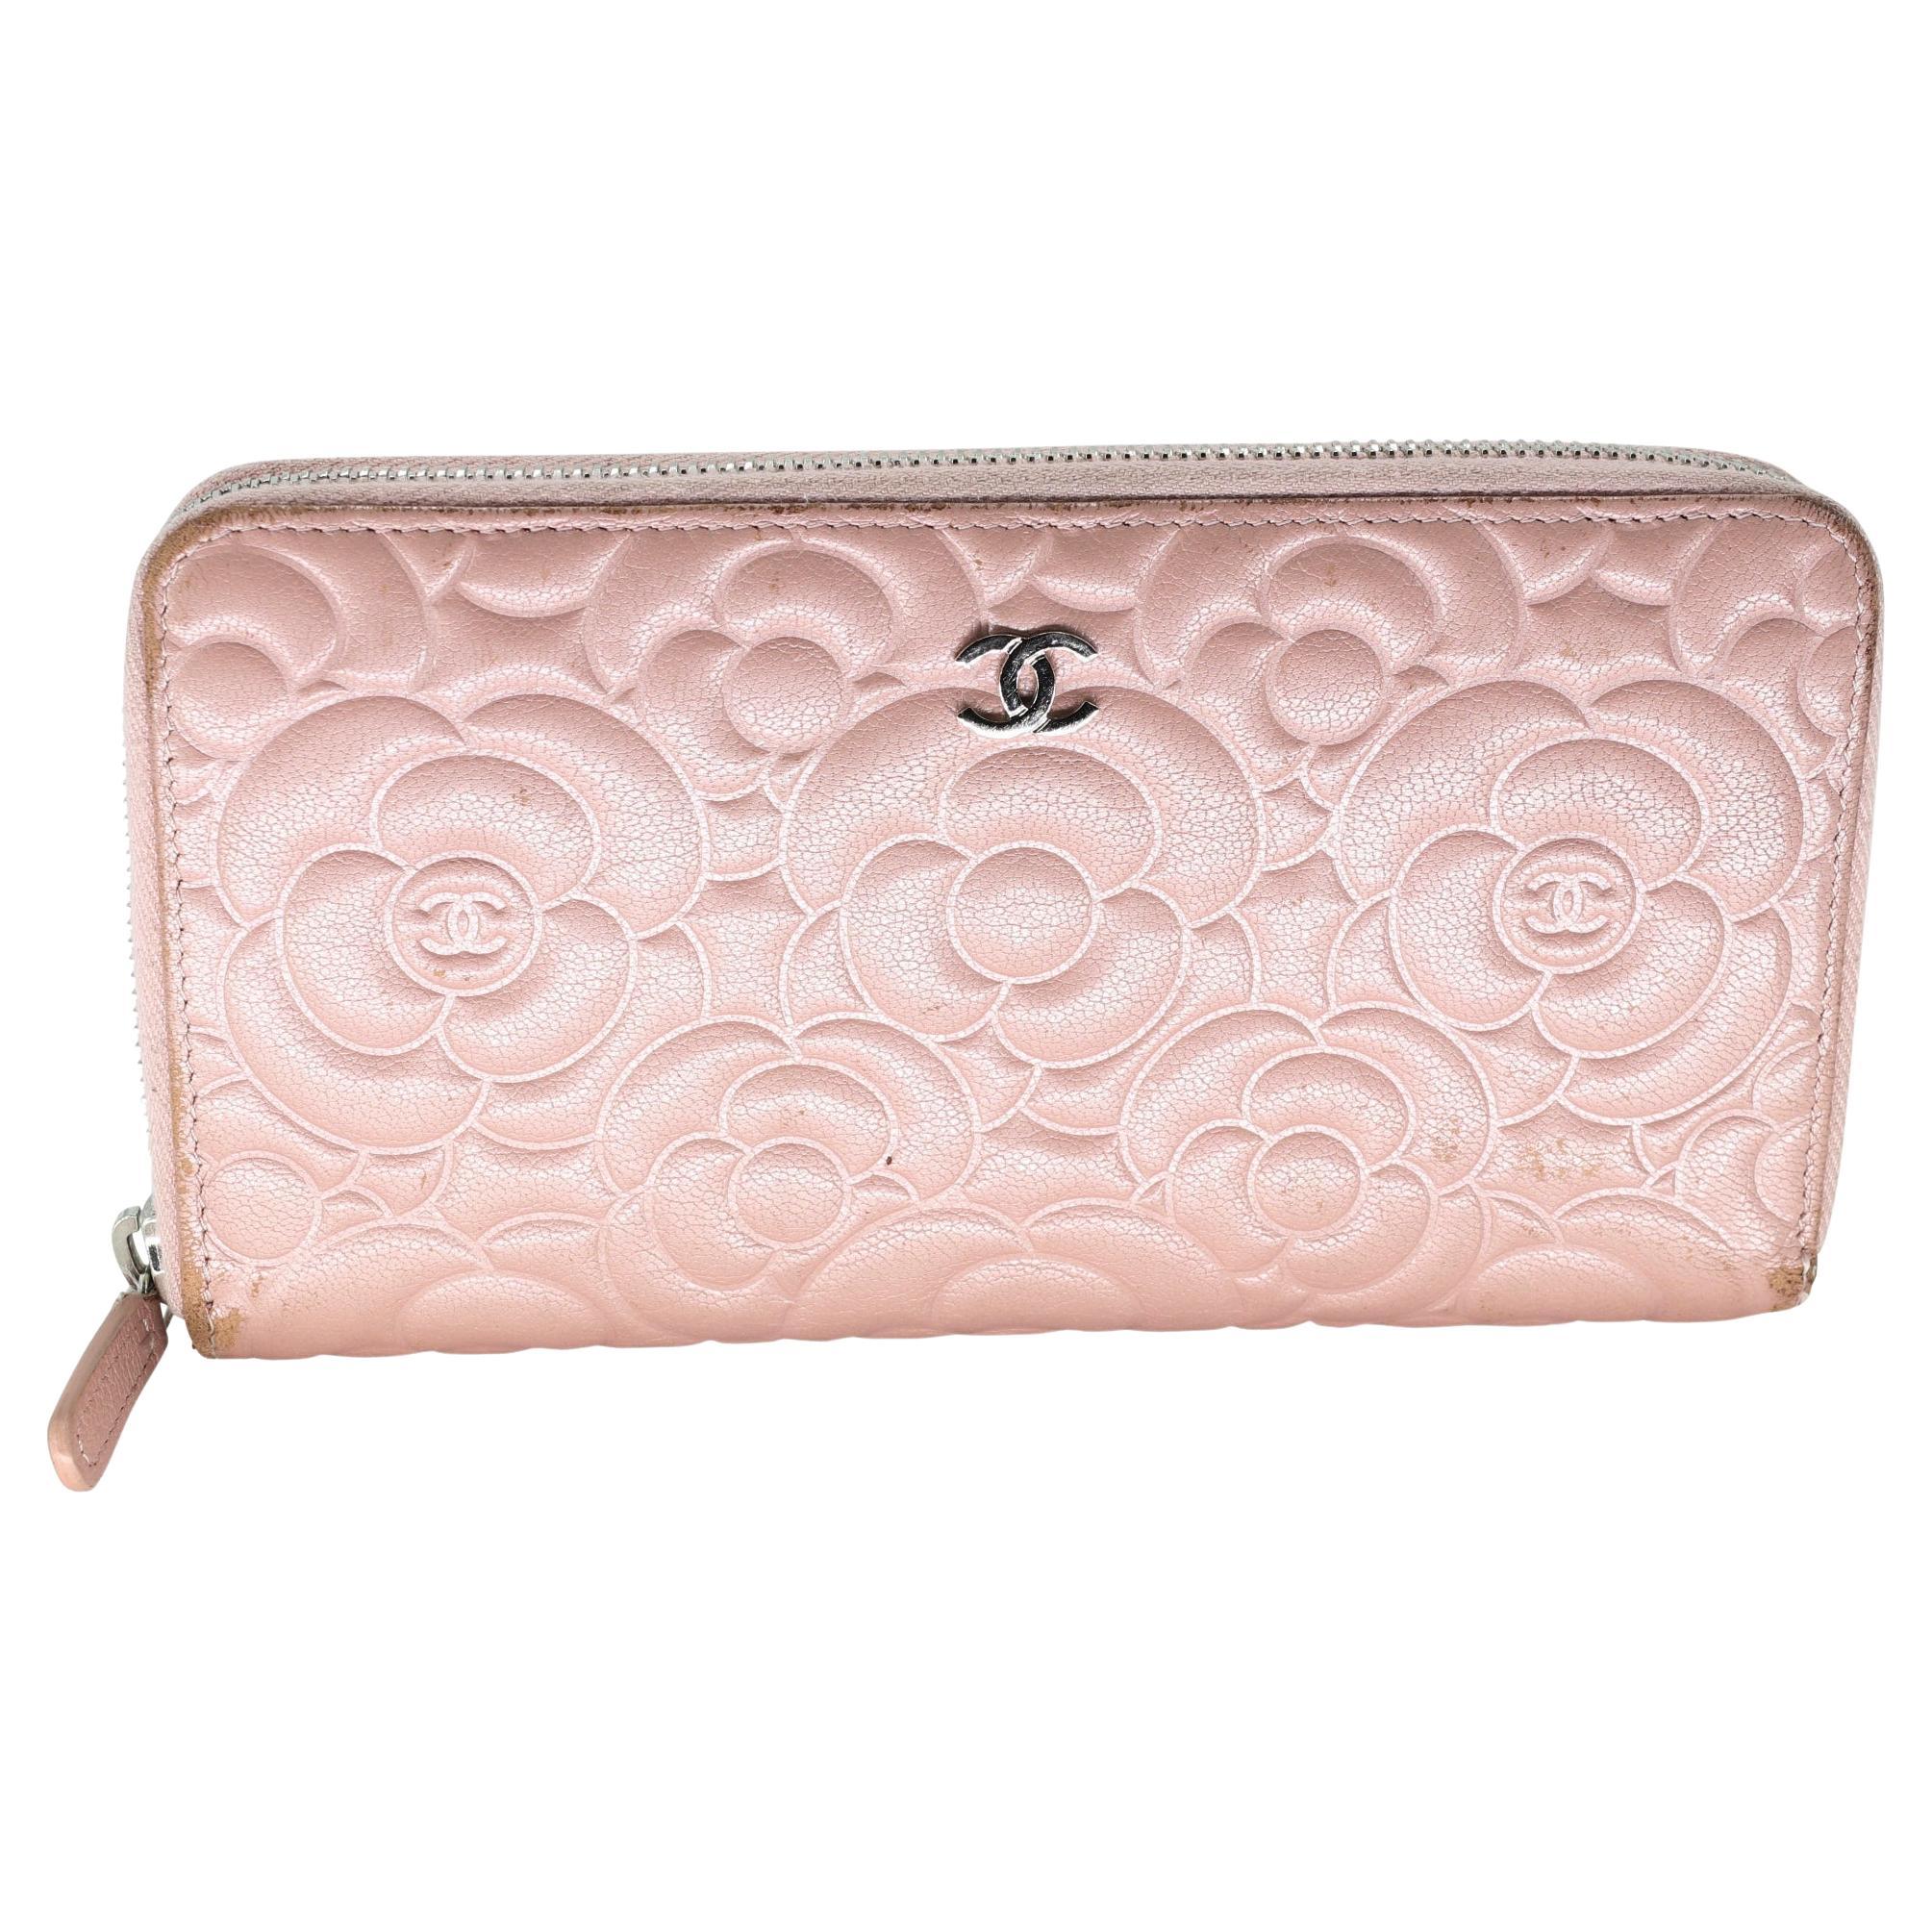 CHANEL wallet HOT pink caviar zippy NEW box crazy fabulous